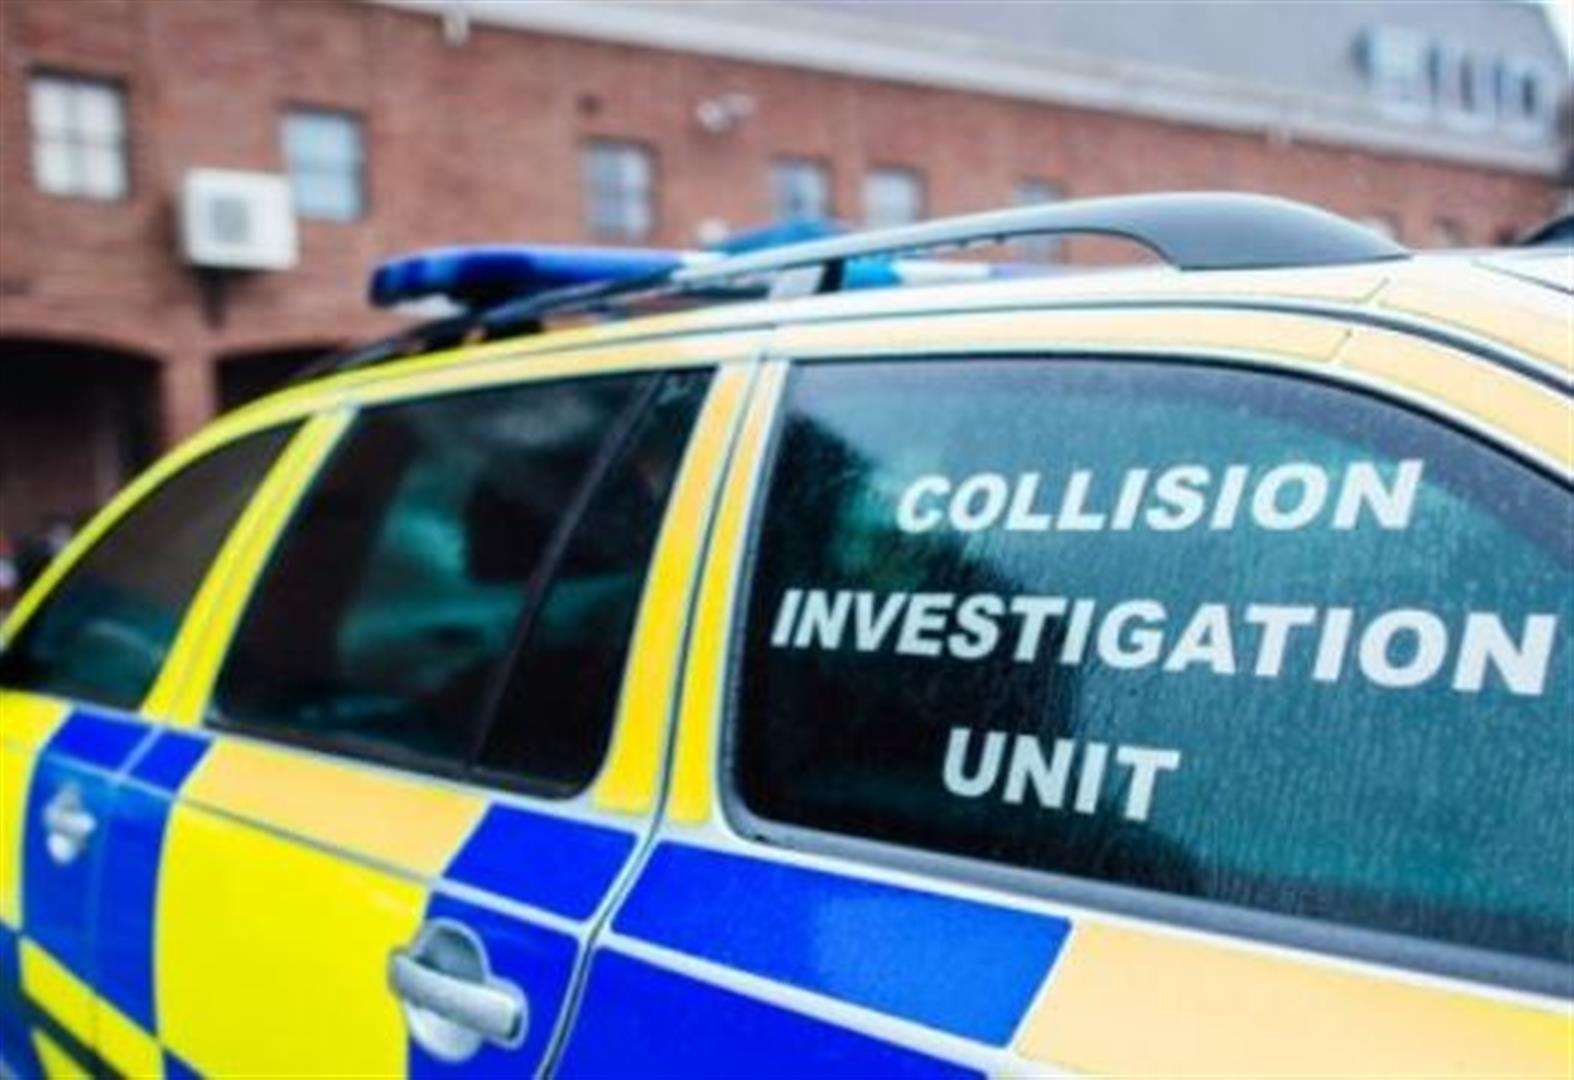 Kent Police collision investigation unit - Stock Image (1614810)